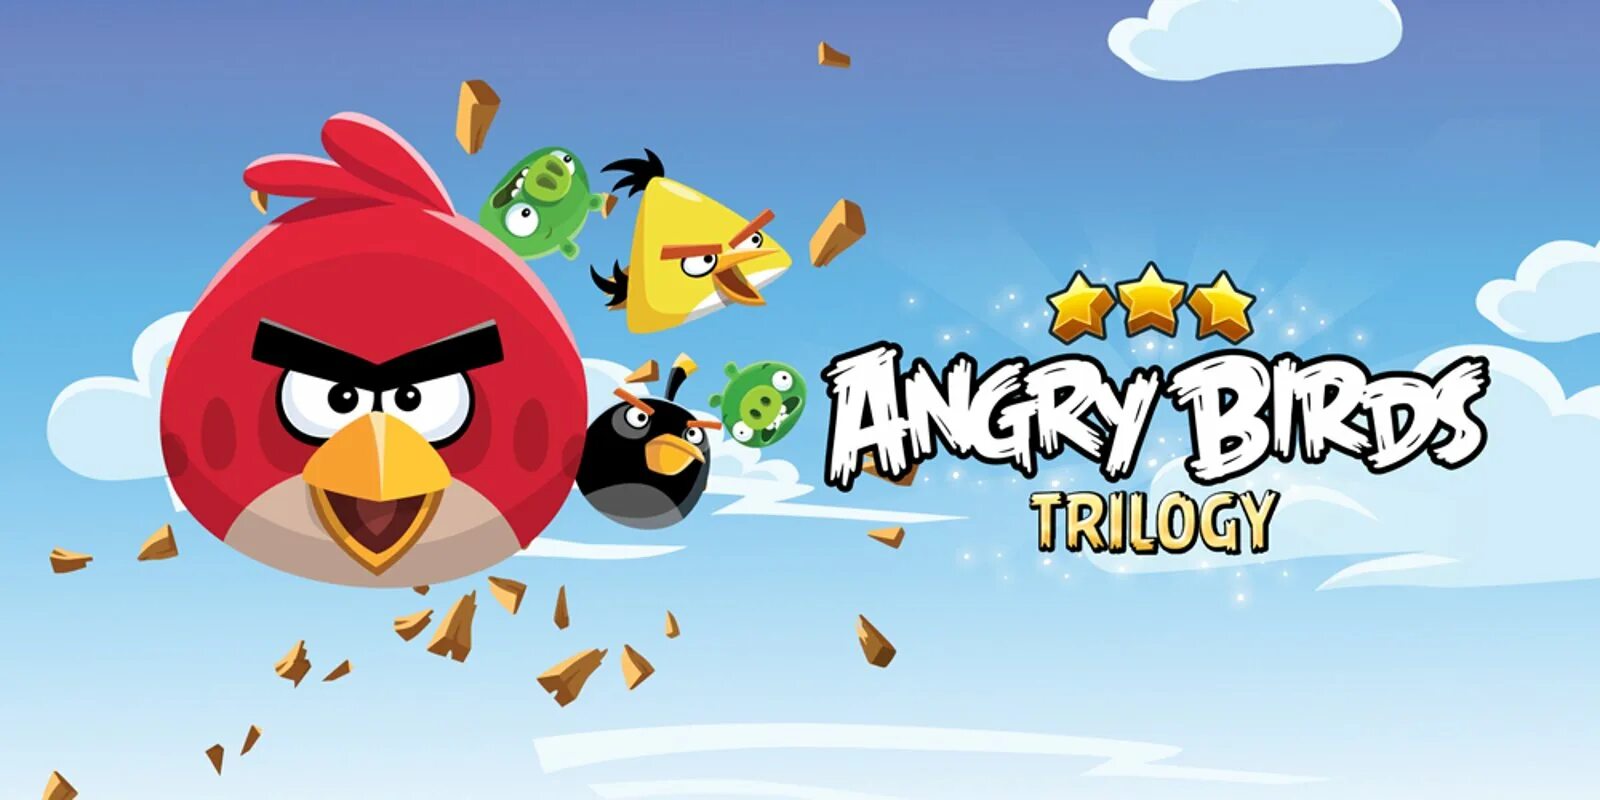 Angry birds eagle. Игра Angry Birds Trilogy. Энгри бердз 2009. Ровио Энгри бердз. Angry Birds первая игра.